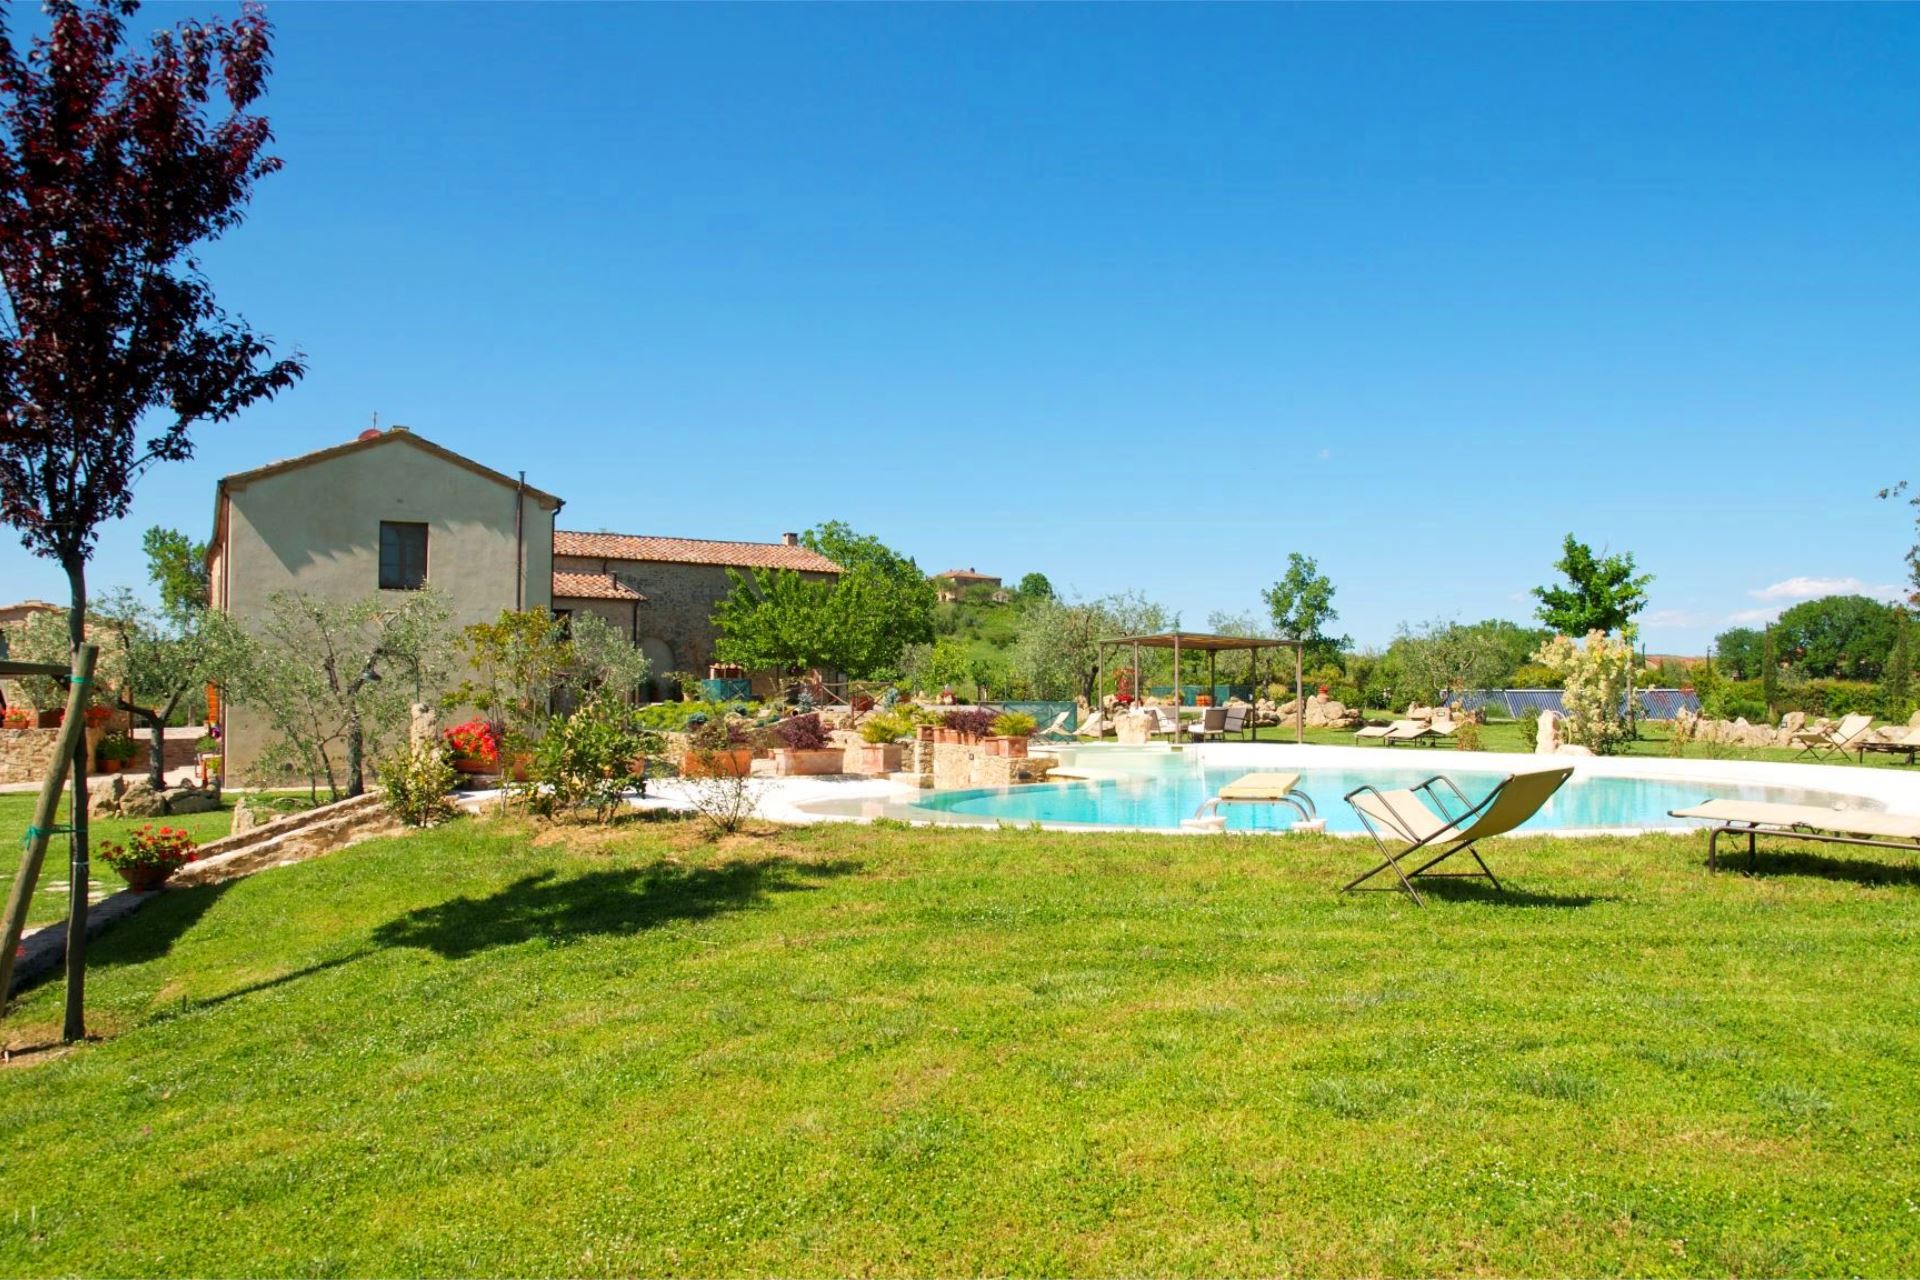 421_4f4fc5a_Agriturimso, vakantiehuis met privé zwembad, Toscane, Asciano, Val D'Orcia (1)